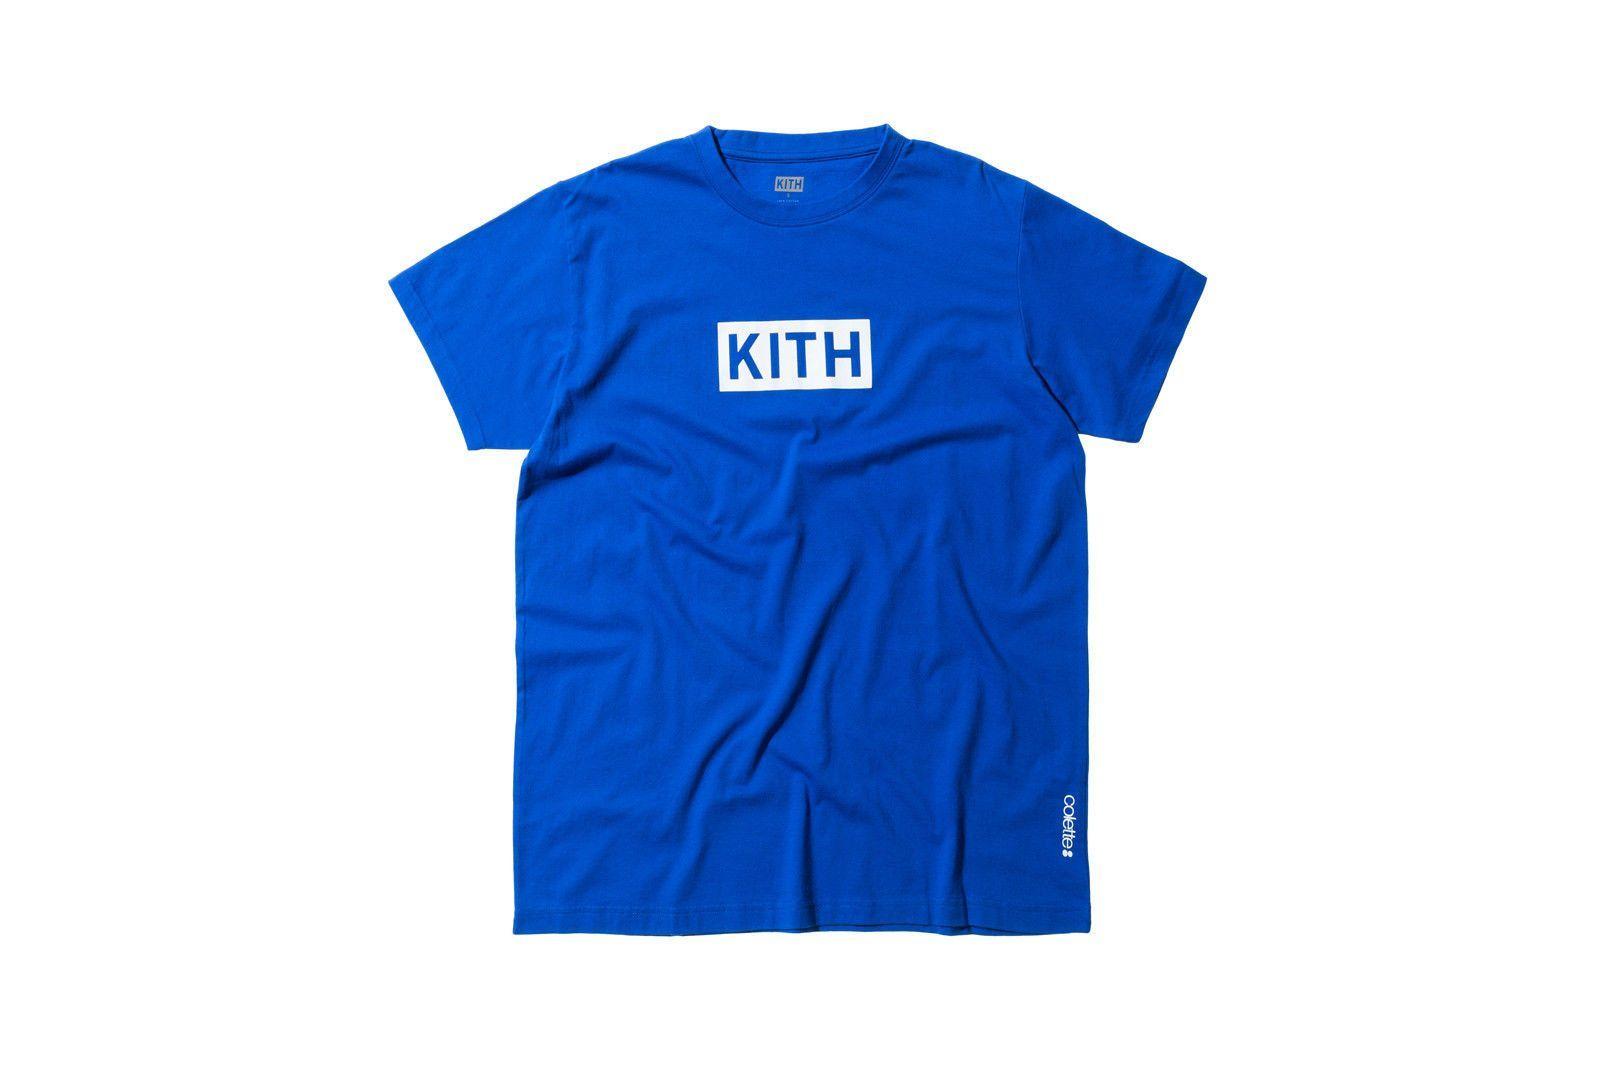 White a Blue Box Logo - KITH x Colette Box Logo T-Shirt Blue Tee White Large L 150 GSM ...